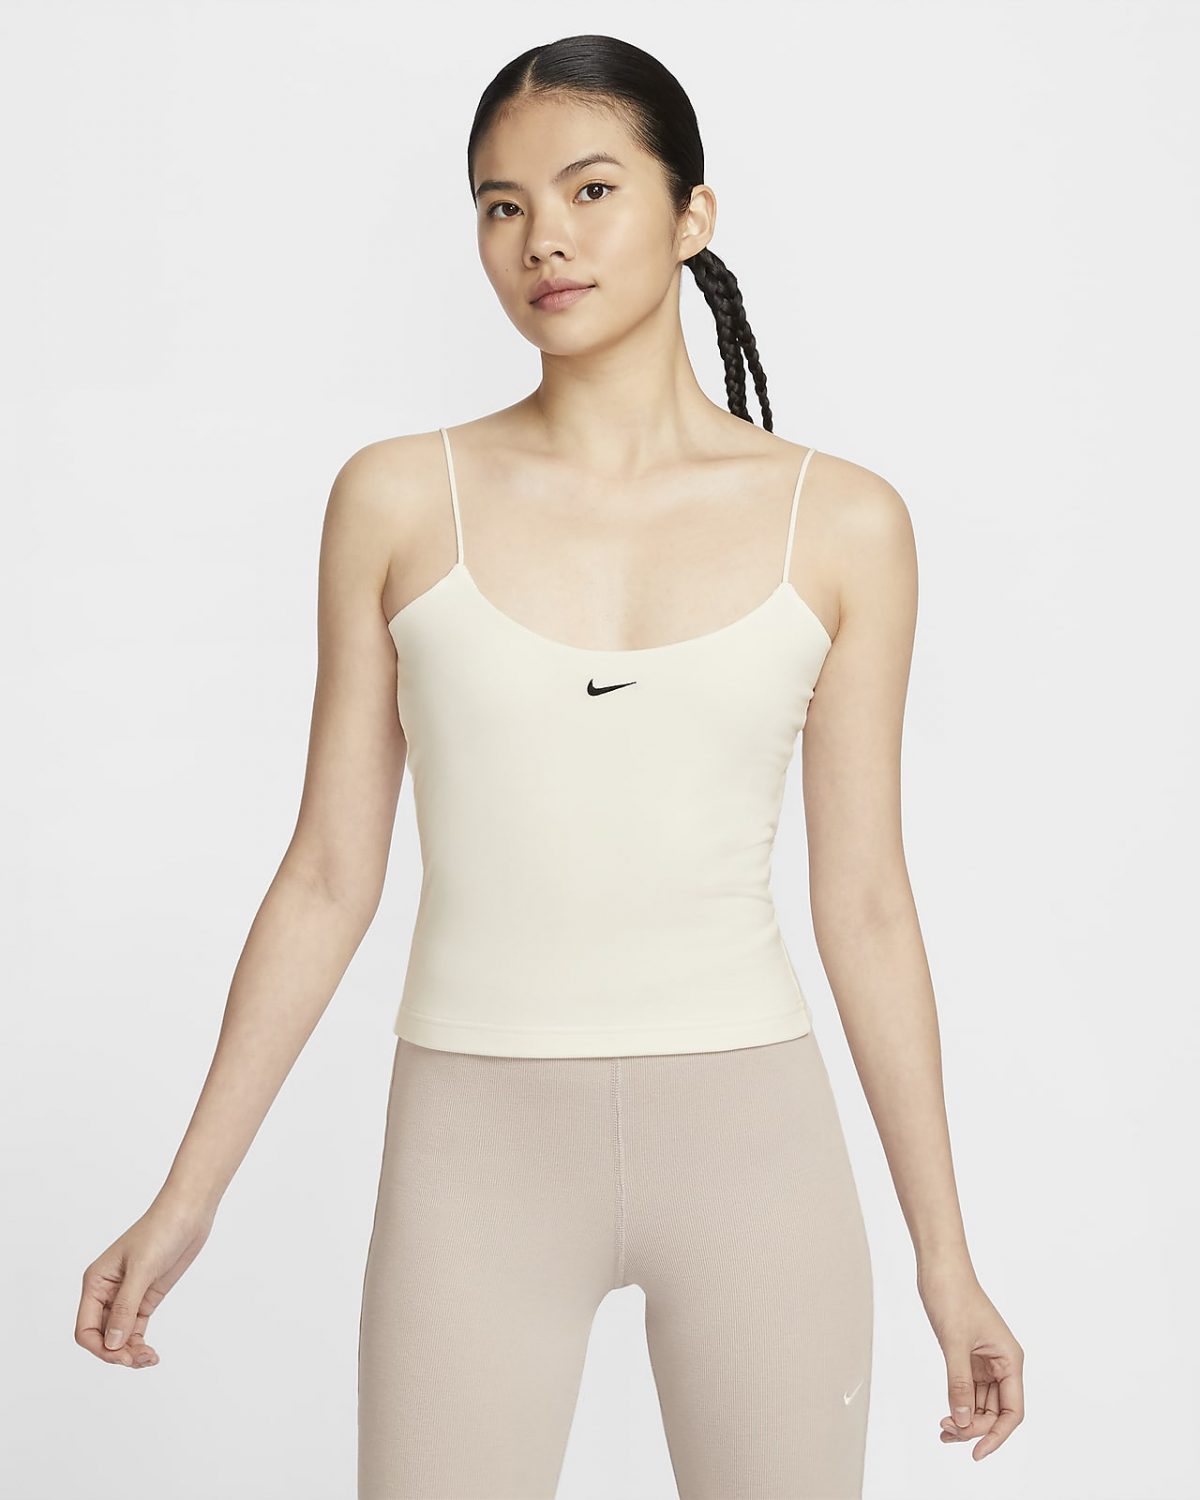 Женская спортивная одежда Nike Sportswear Chill Knit фото